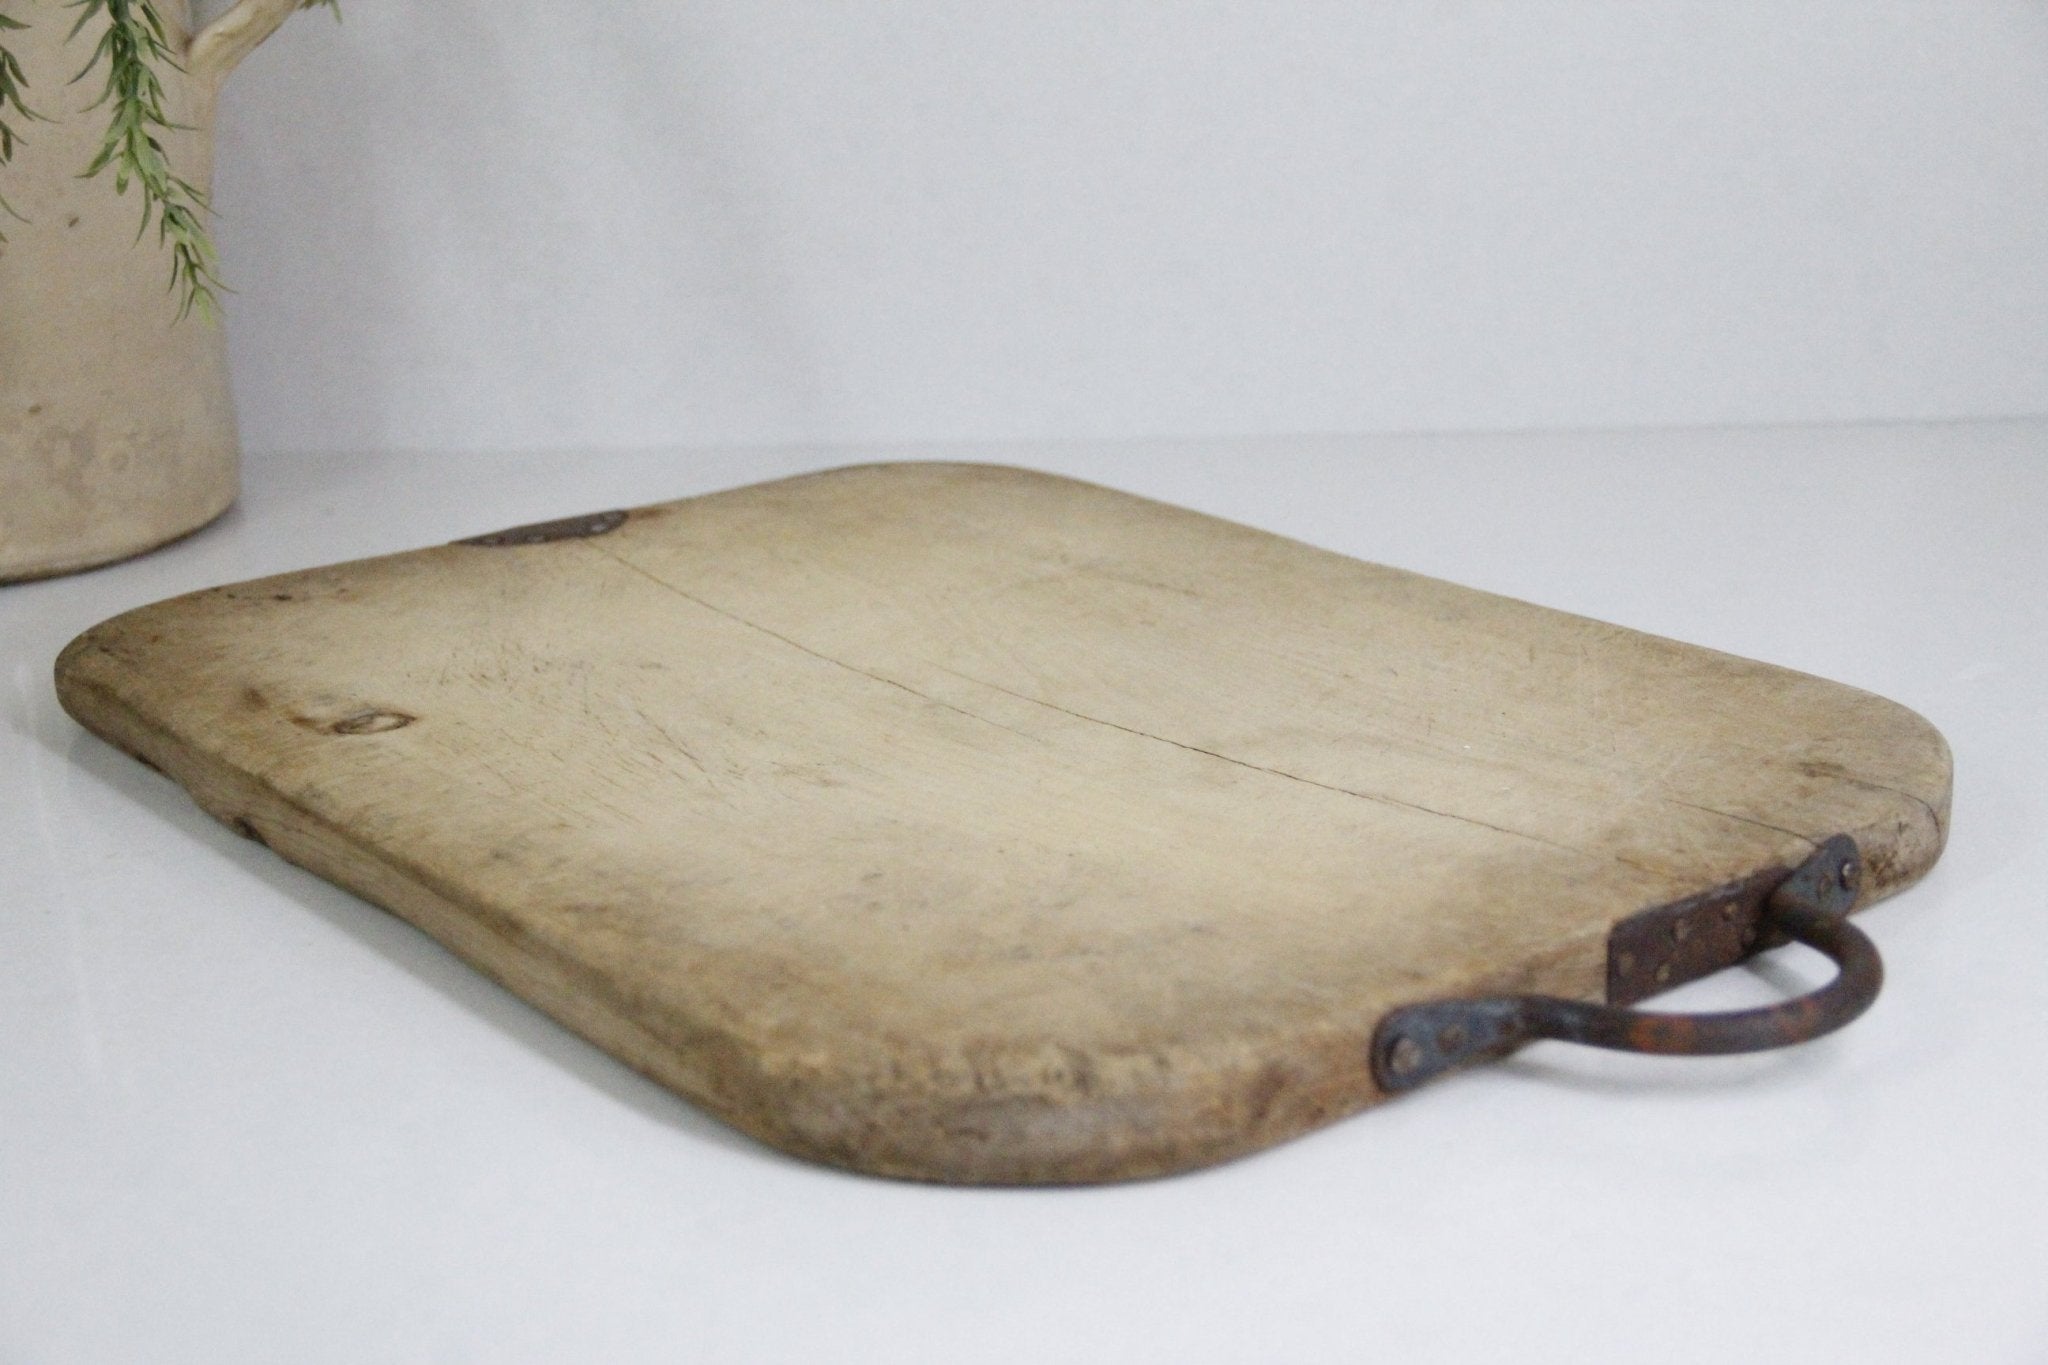 Antique Bread Board With Handle | European - Debra Hall Lifestyle